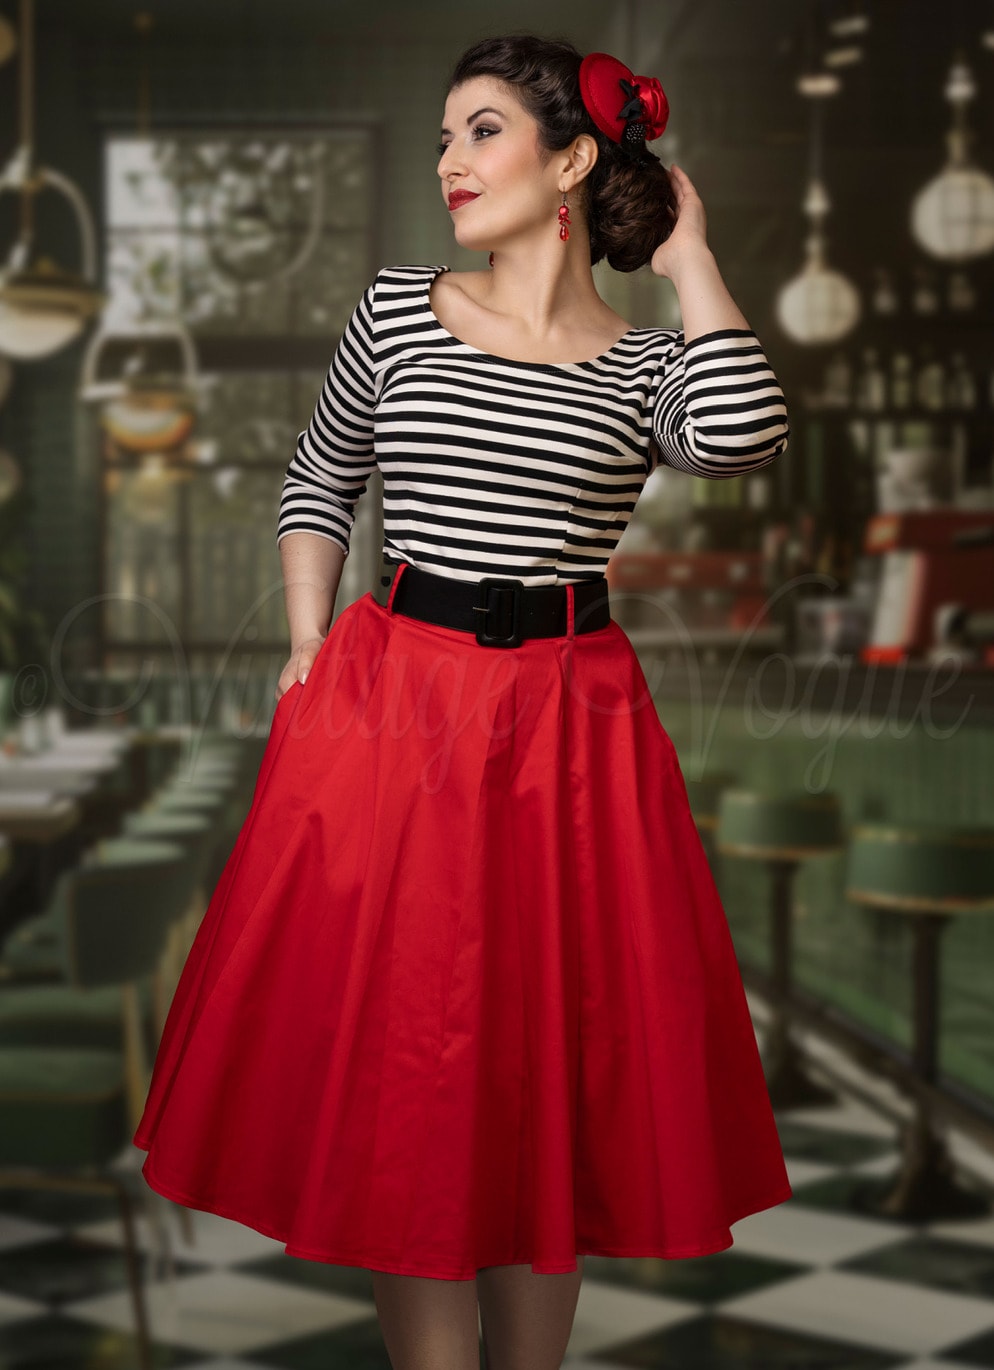 Forever Fifties 50's Retro Rockabilly Swing Kleid Alice Stripes Dress in Rot Schwarz Weiß 50er Jahre Petticoat Damenkleid Swing Jive Lindy Hop gestreift